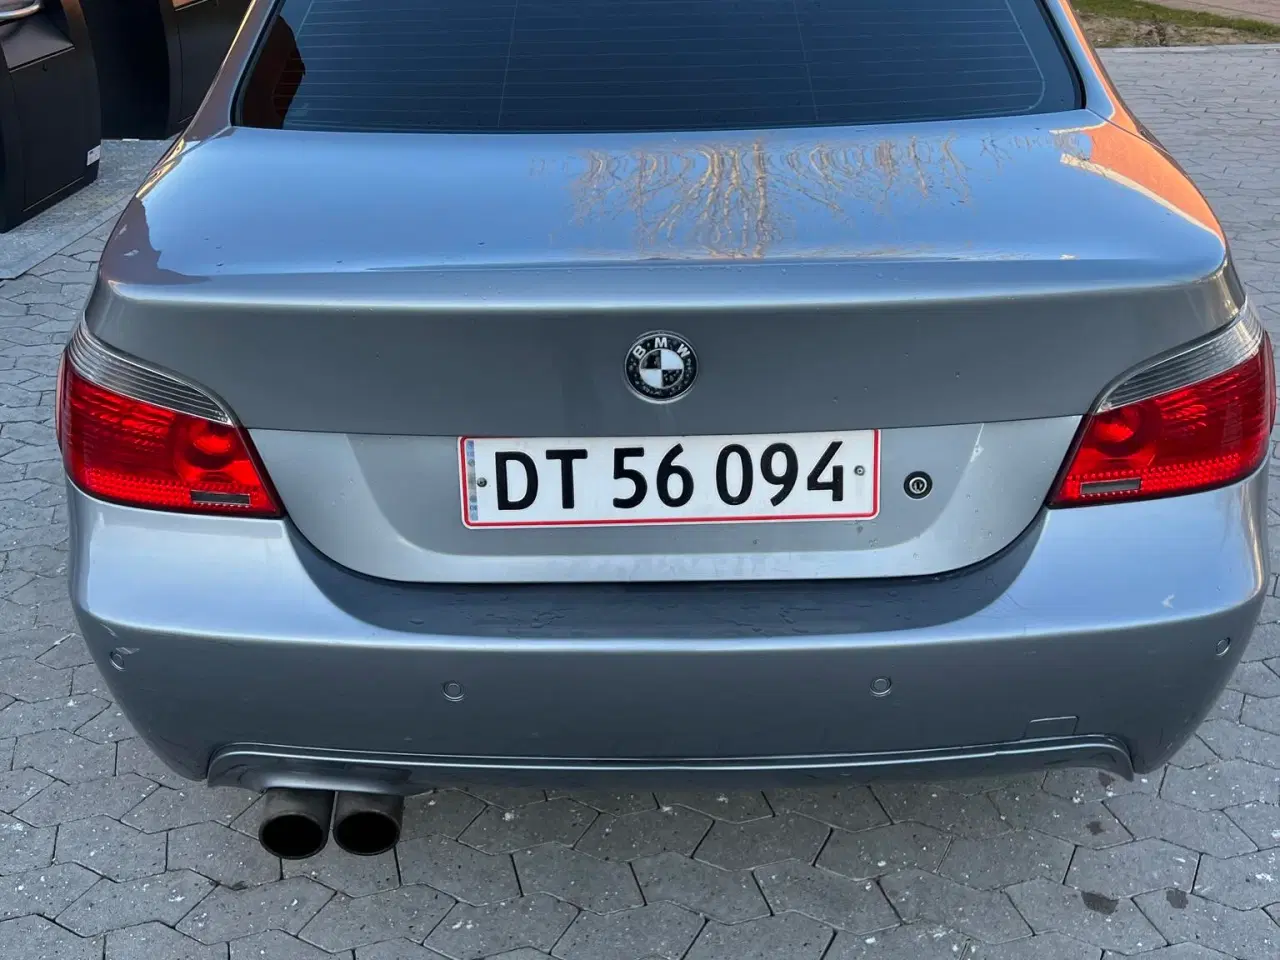 Billede 6 - Personbil BMW 520i